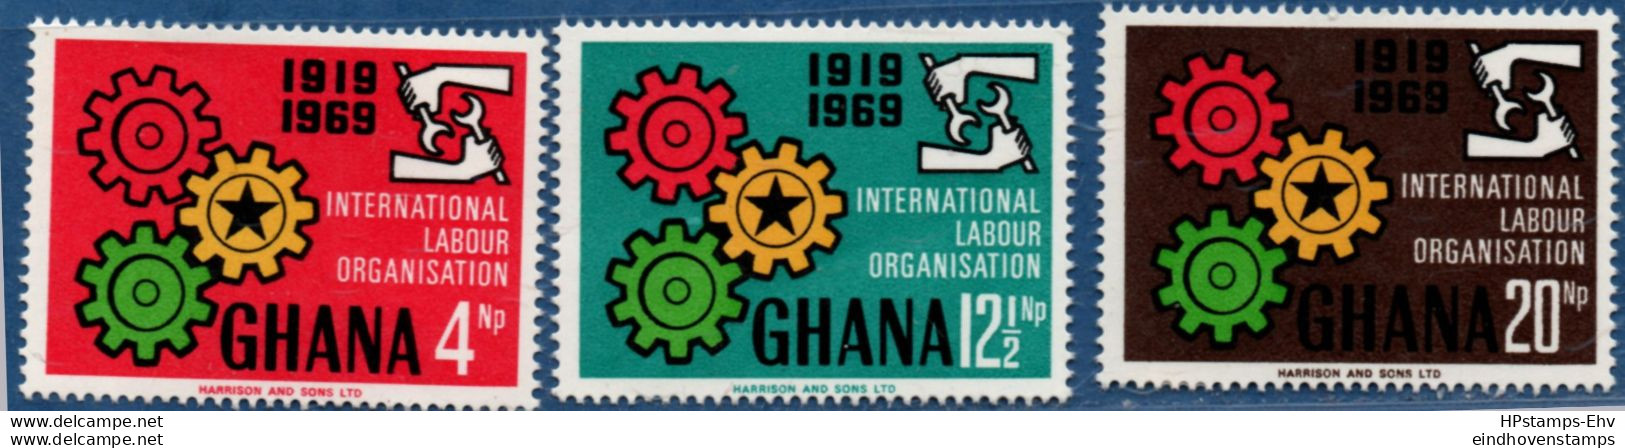 Ghana 1969, ILO Labor Organisation 3 Stamps MNH 2105.2426 OIT - IAO